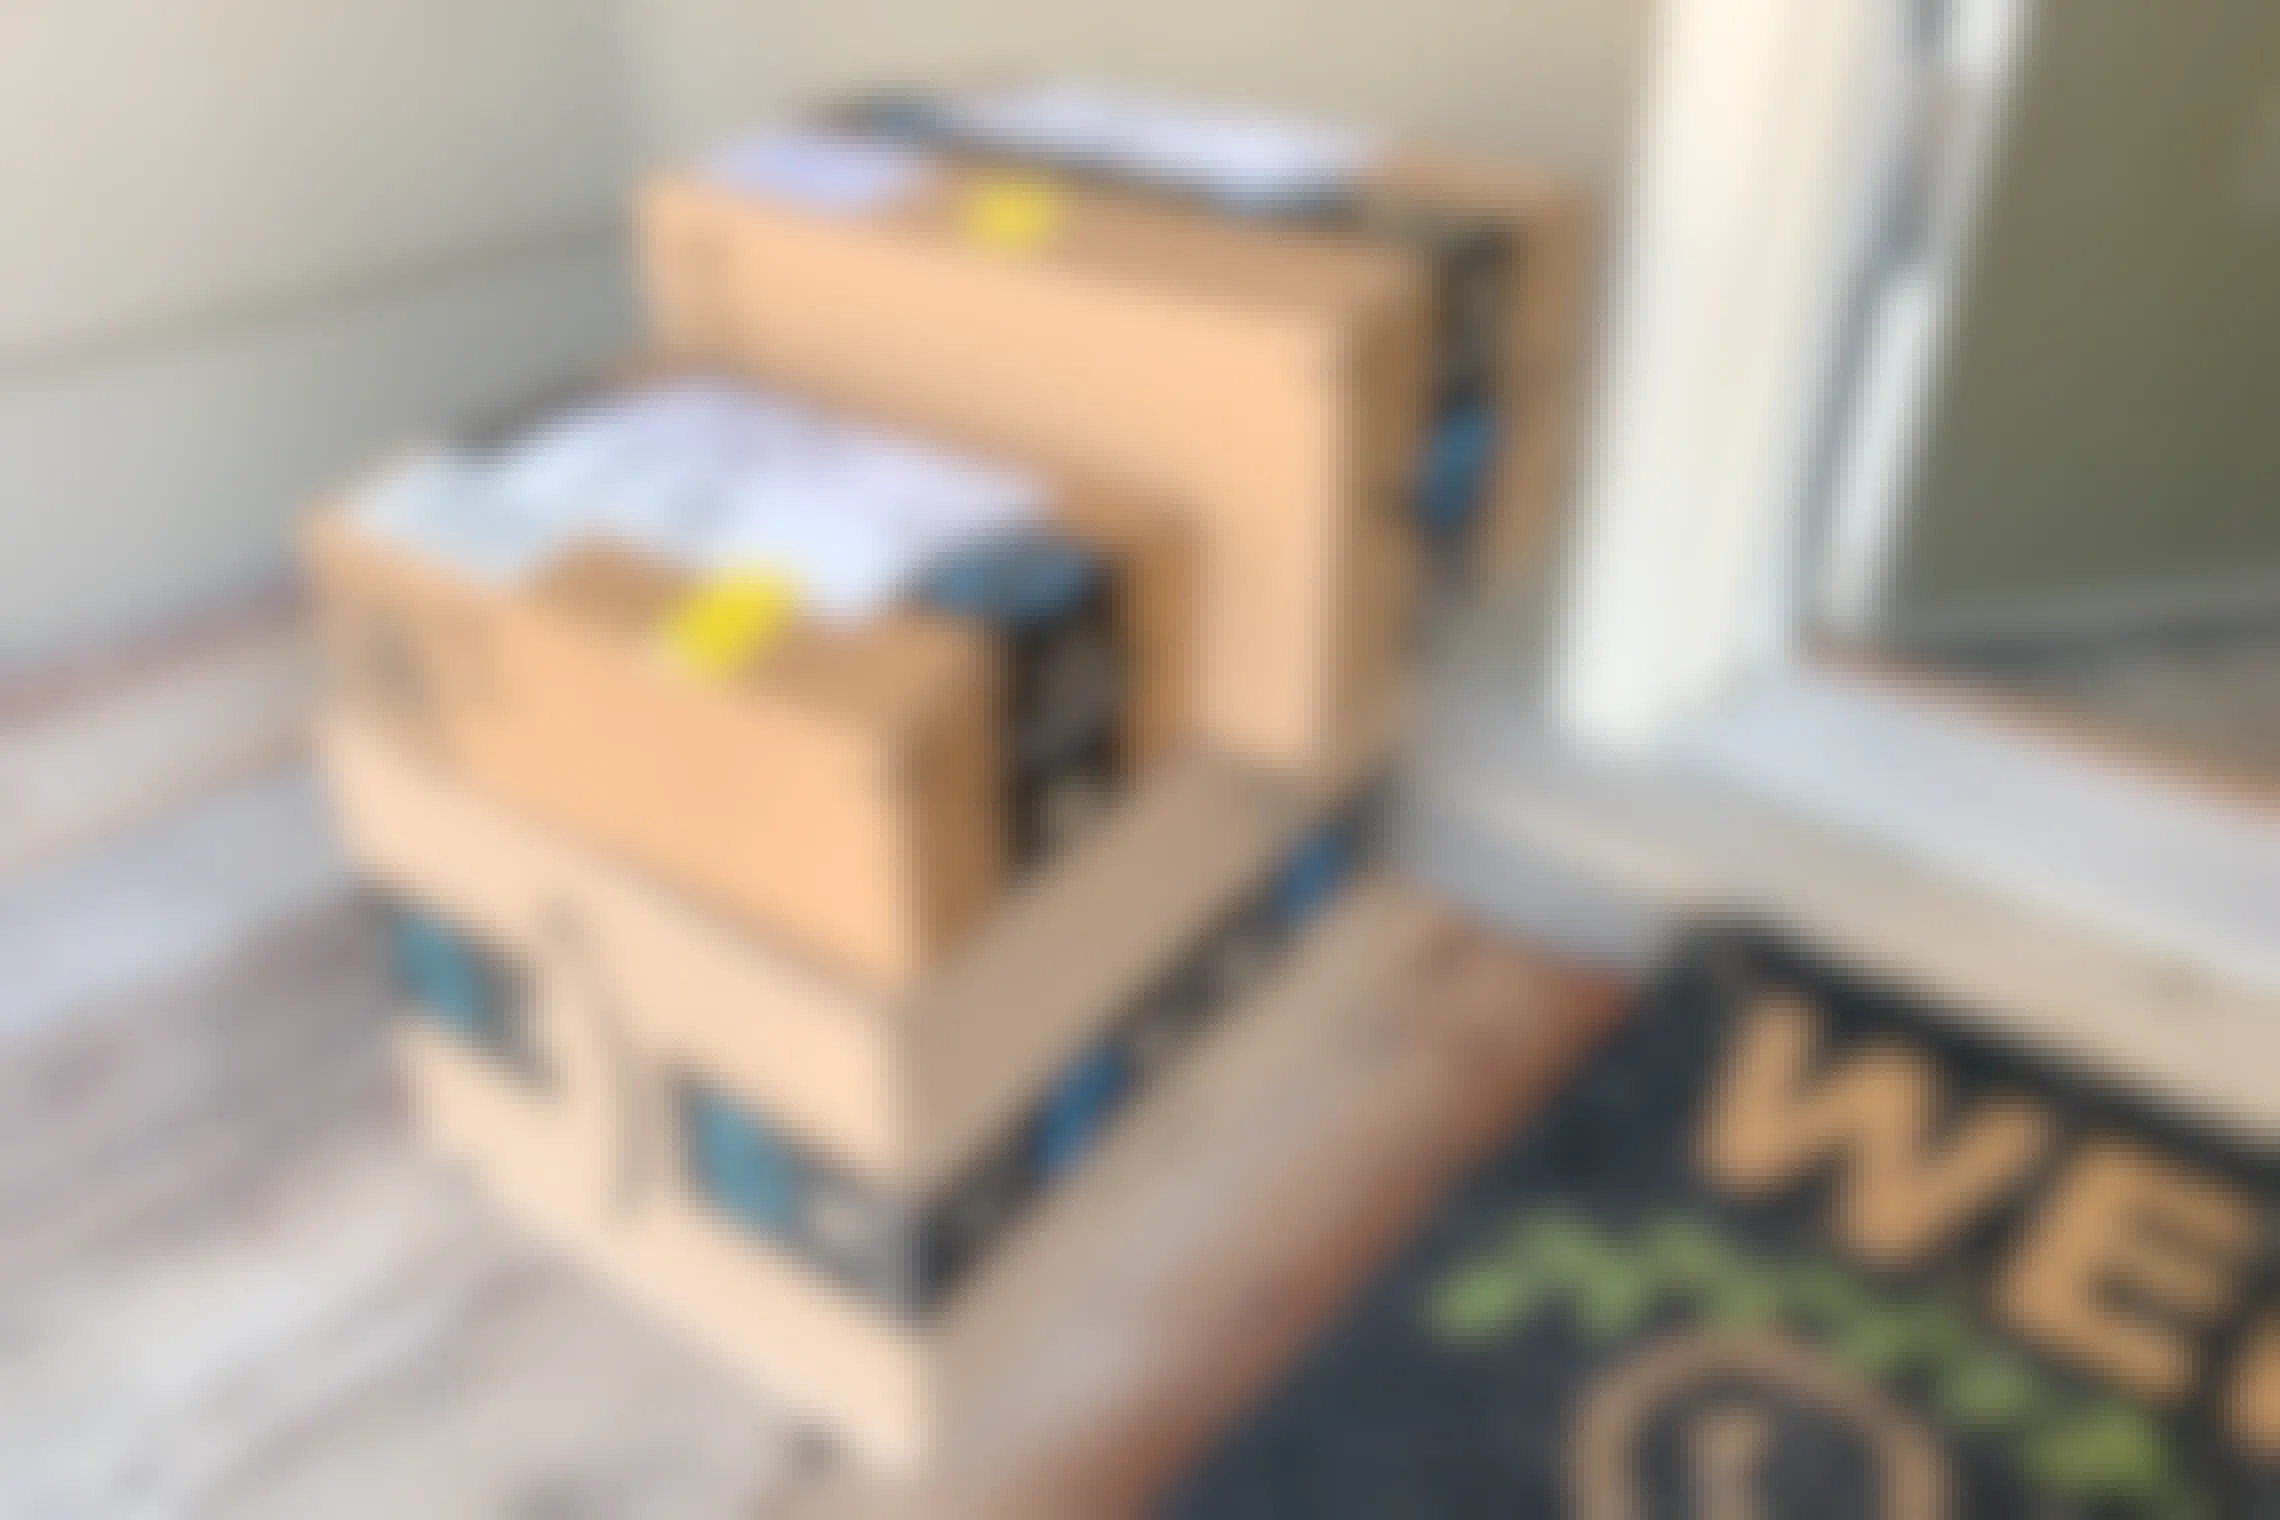 Three amazon prime boxes of varying sizes stacked on someone's doorstep